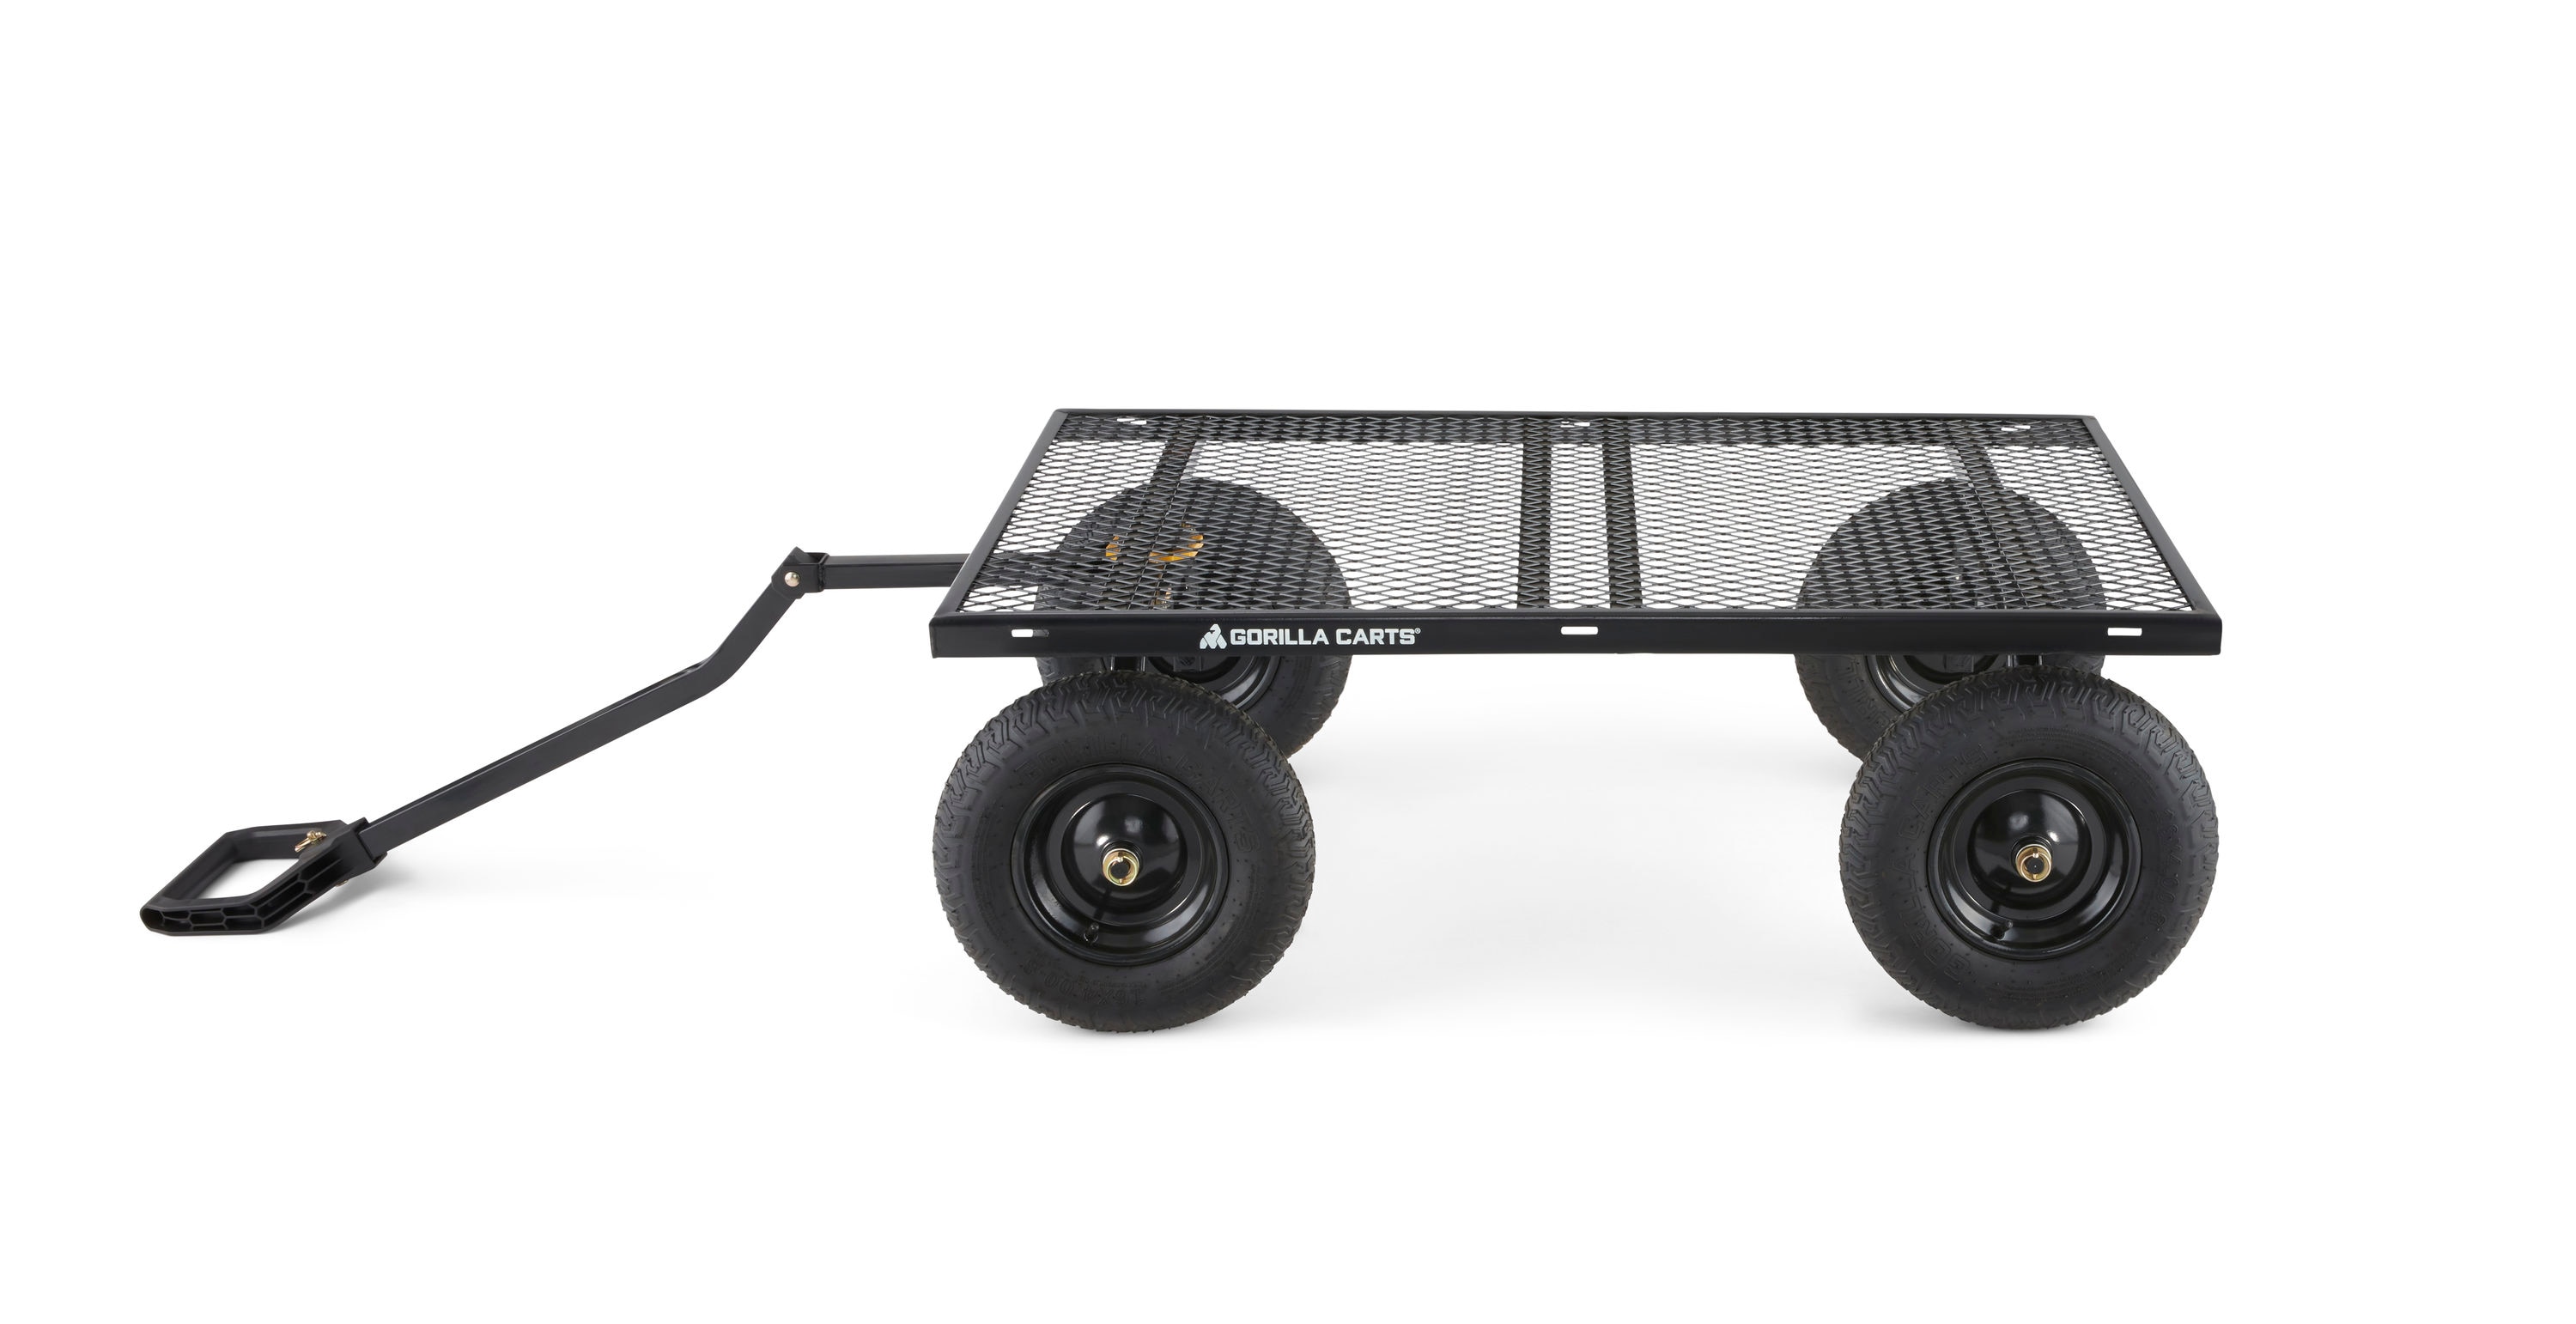 Gorilla Carts 5 Cu Ft Poly Yard Cart - Black, Maintenance-Free